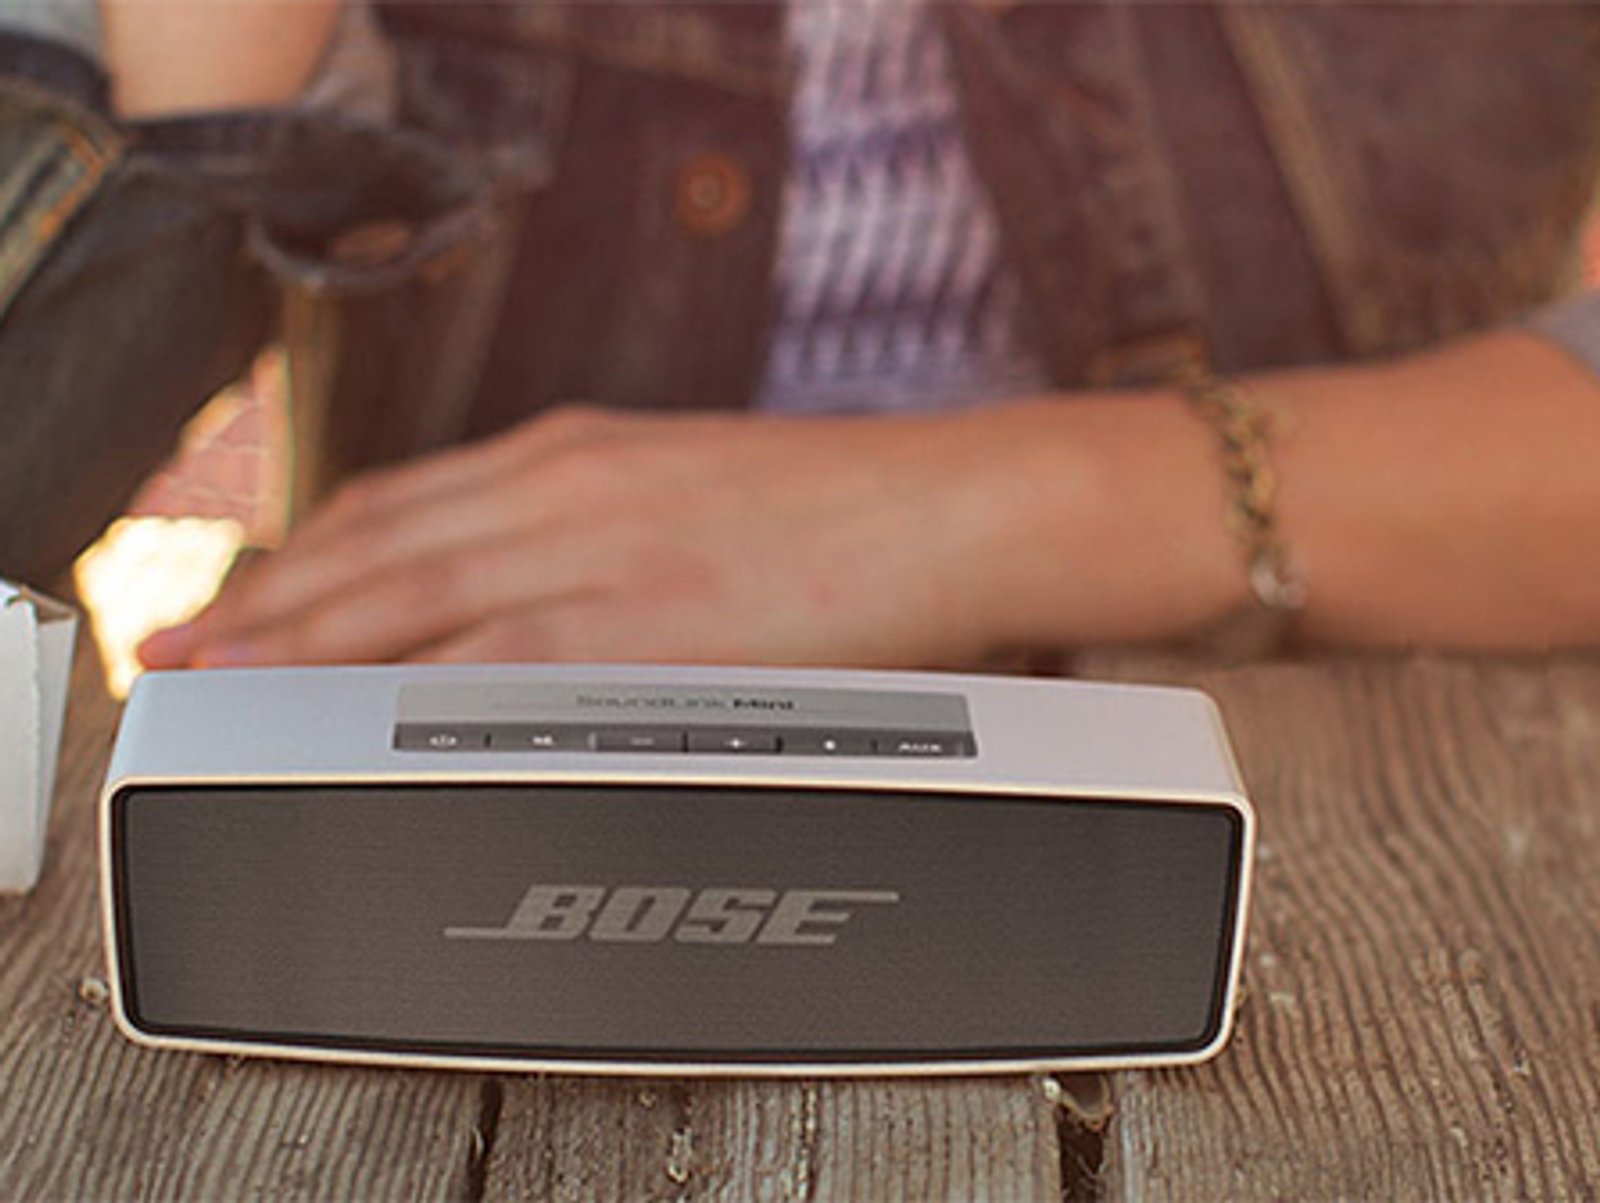 R Estado Cesta Reset: Bose Soundlink Mini zurücksetzen – so geht's